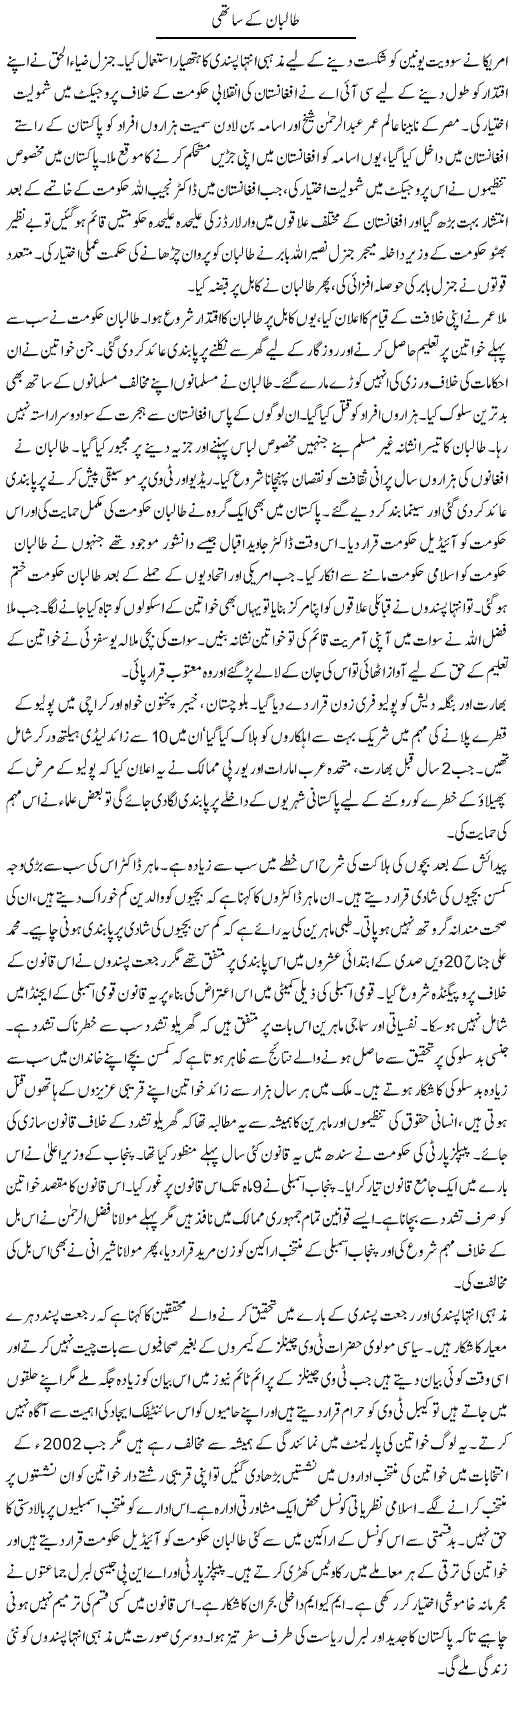 Taliban ke sathi | Tausif Ahmad Khan | Daily Urdu Columns